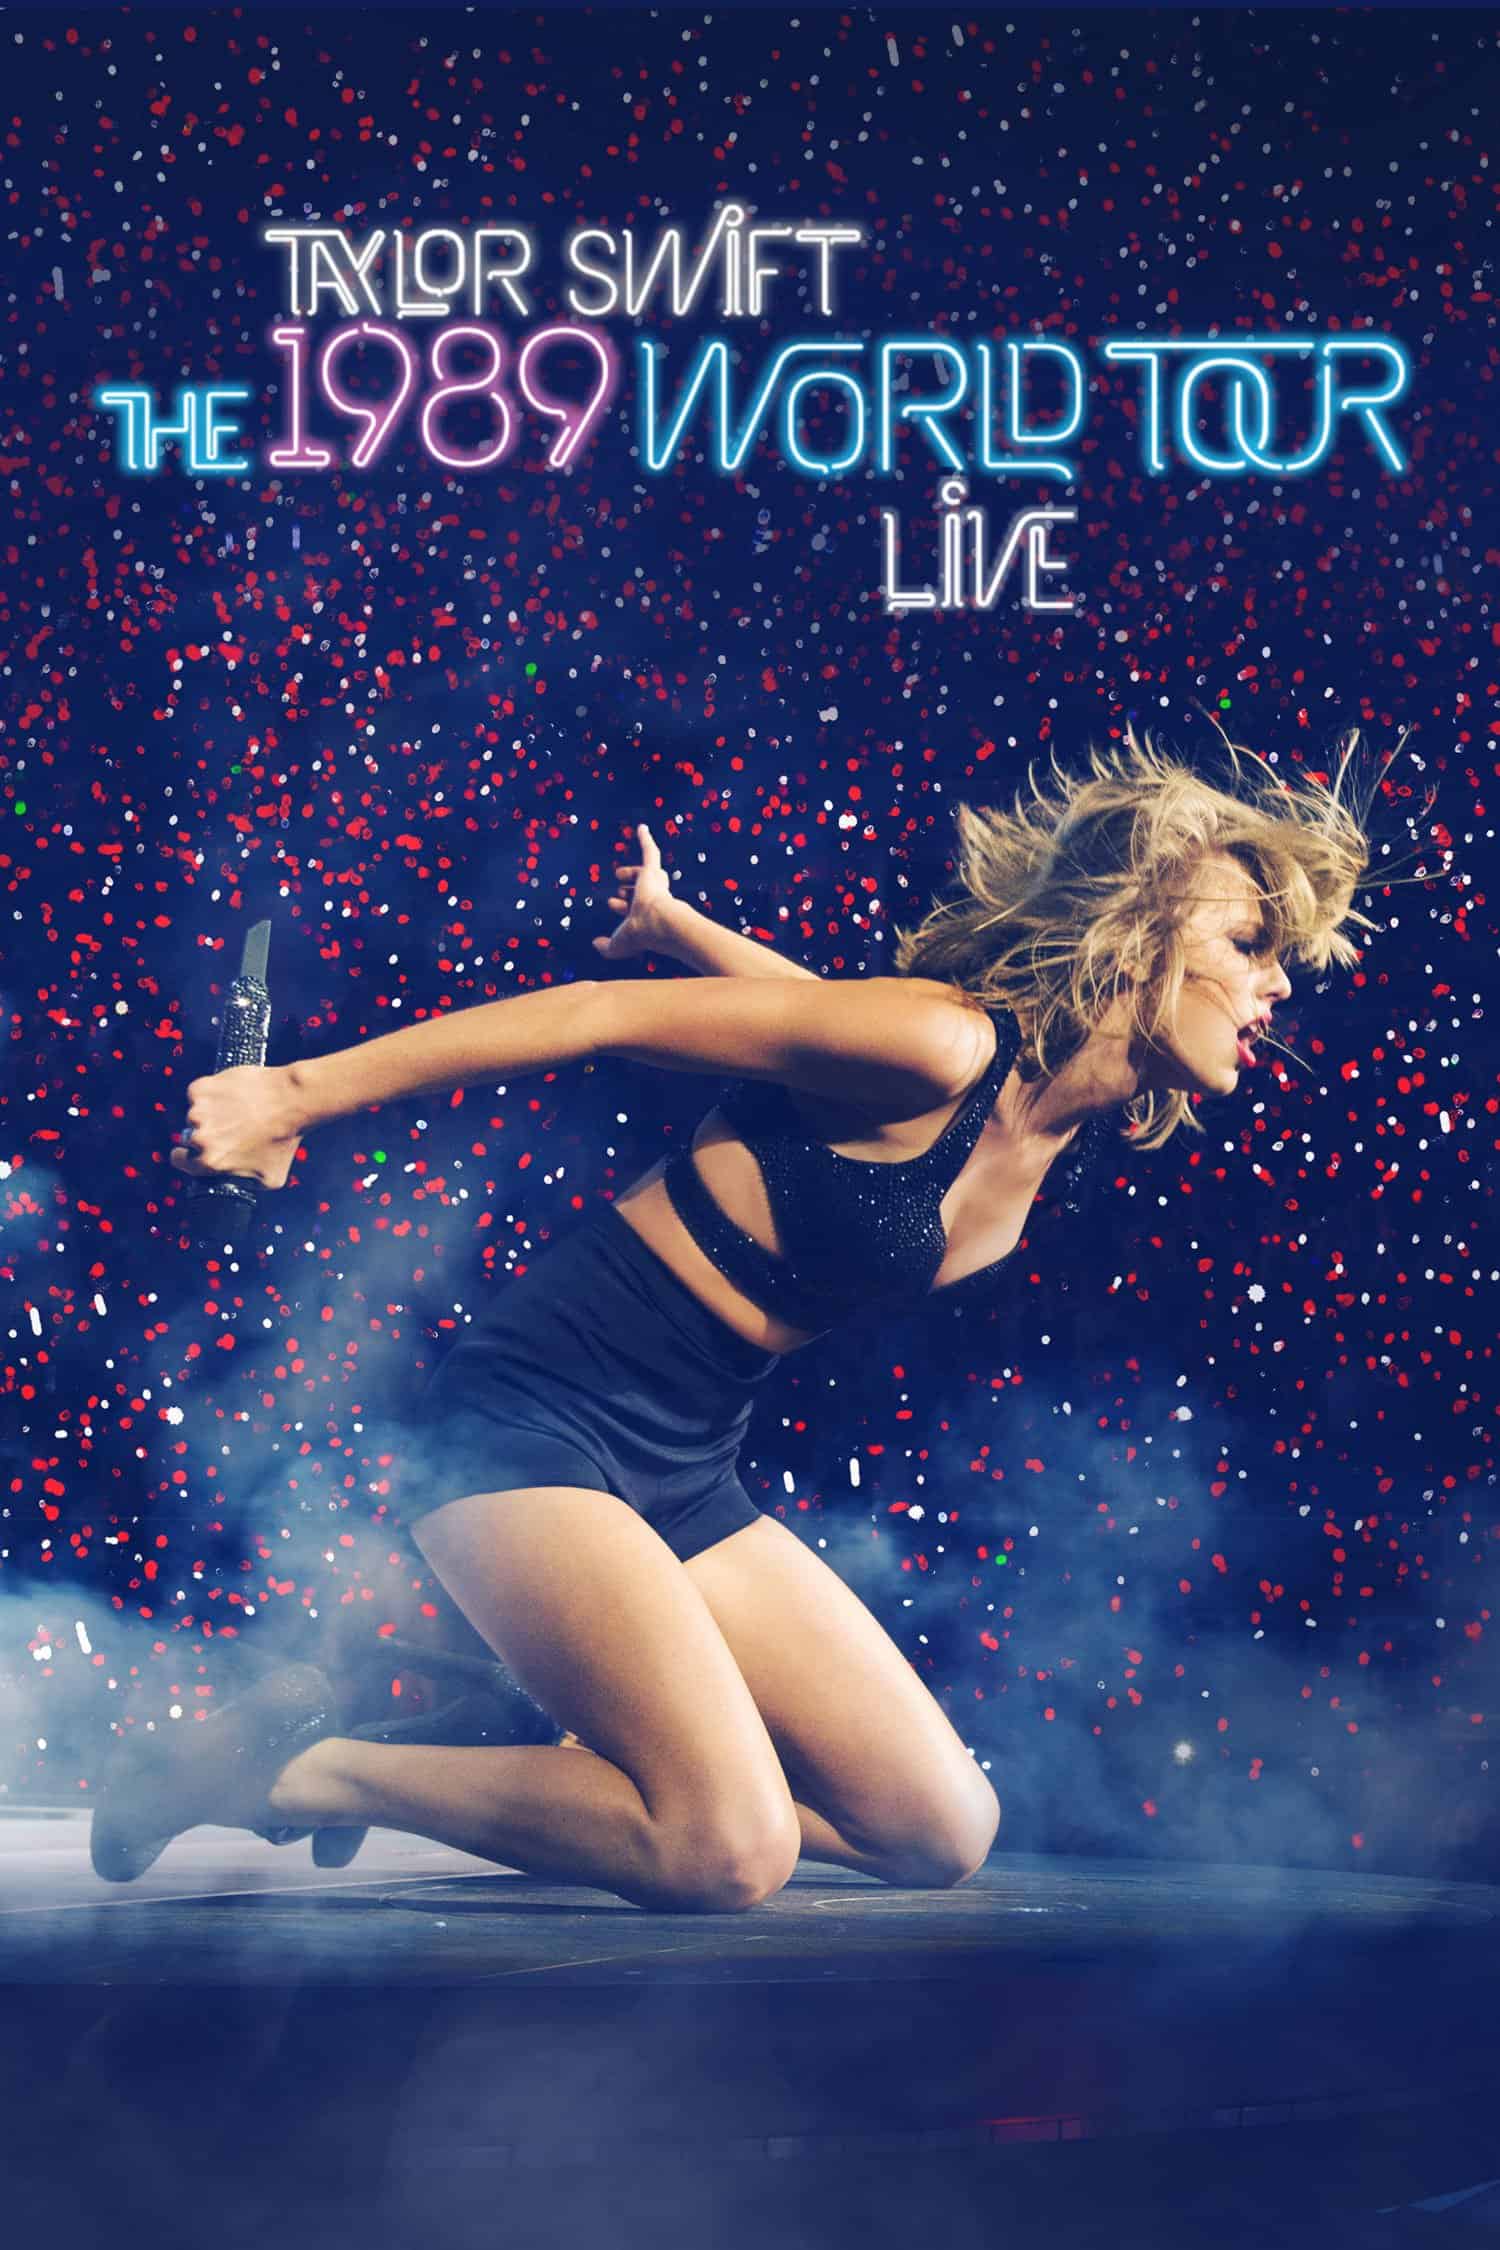 The 1989 World Tour Live, 2015 